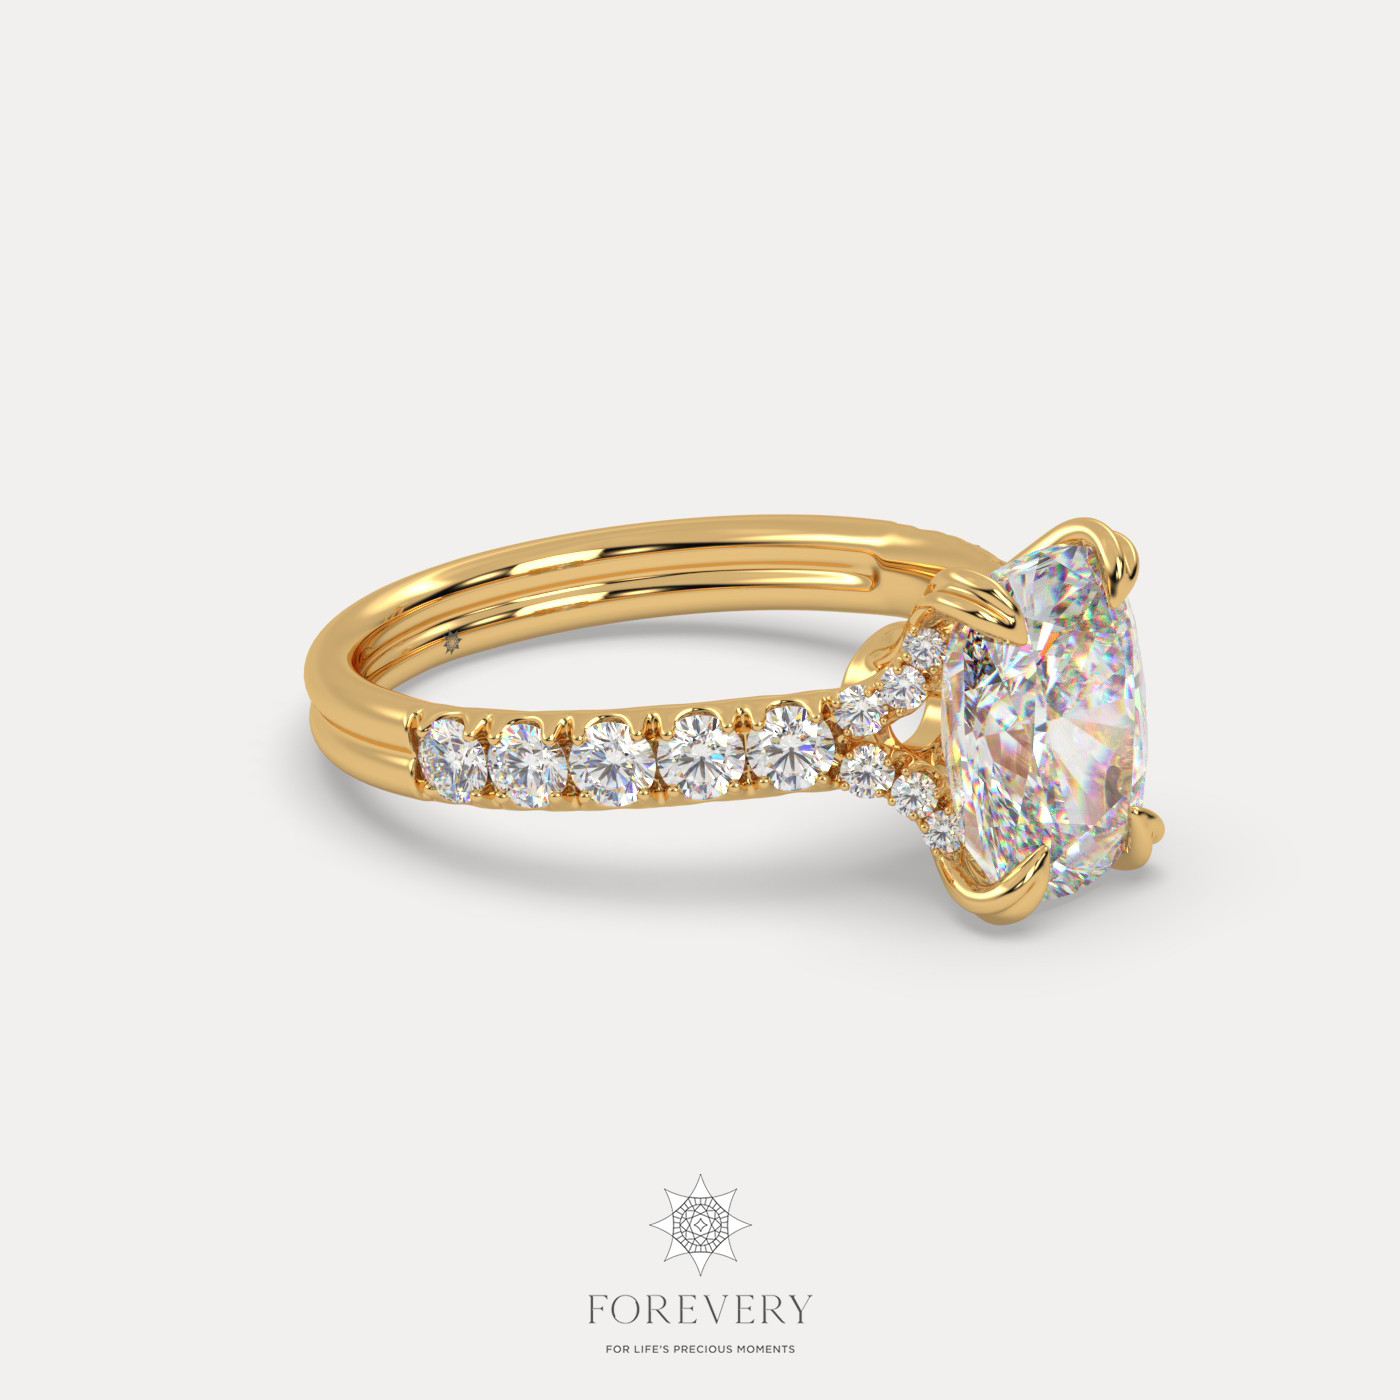 18K YELLOW GOLD Cushion Cut Pave-Style Diamond Engagement Ring